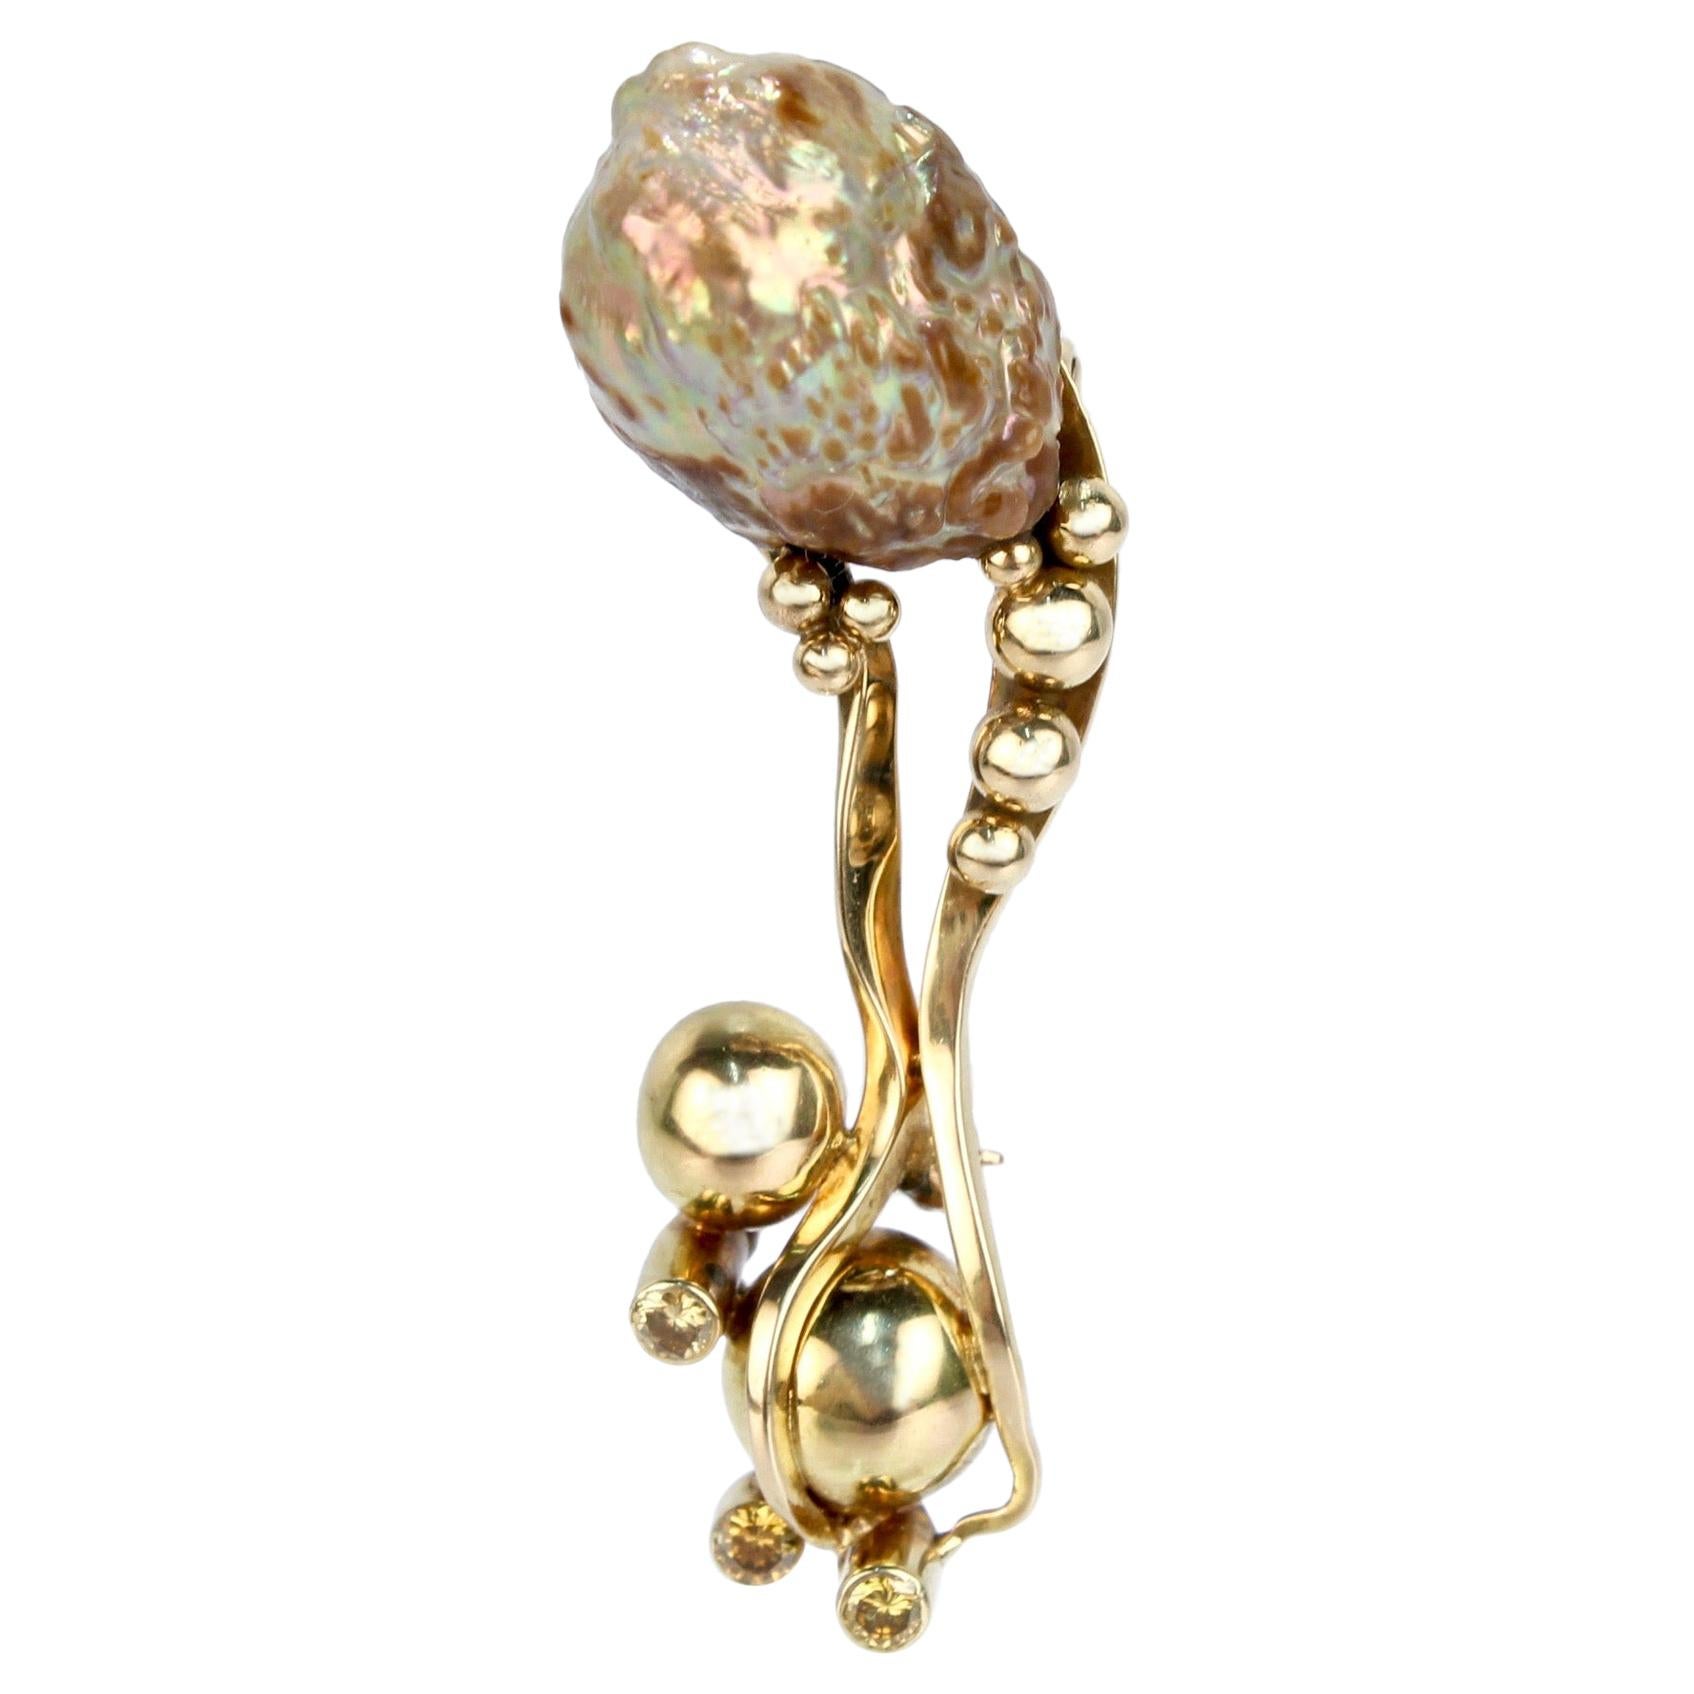 Modernist Biomorphic 14 Karat Gold Yellow Diamond & Baroque Pearl Brooch or Pin